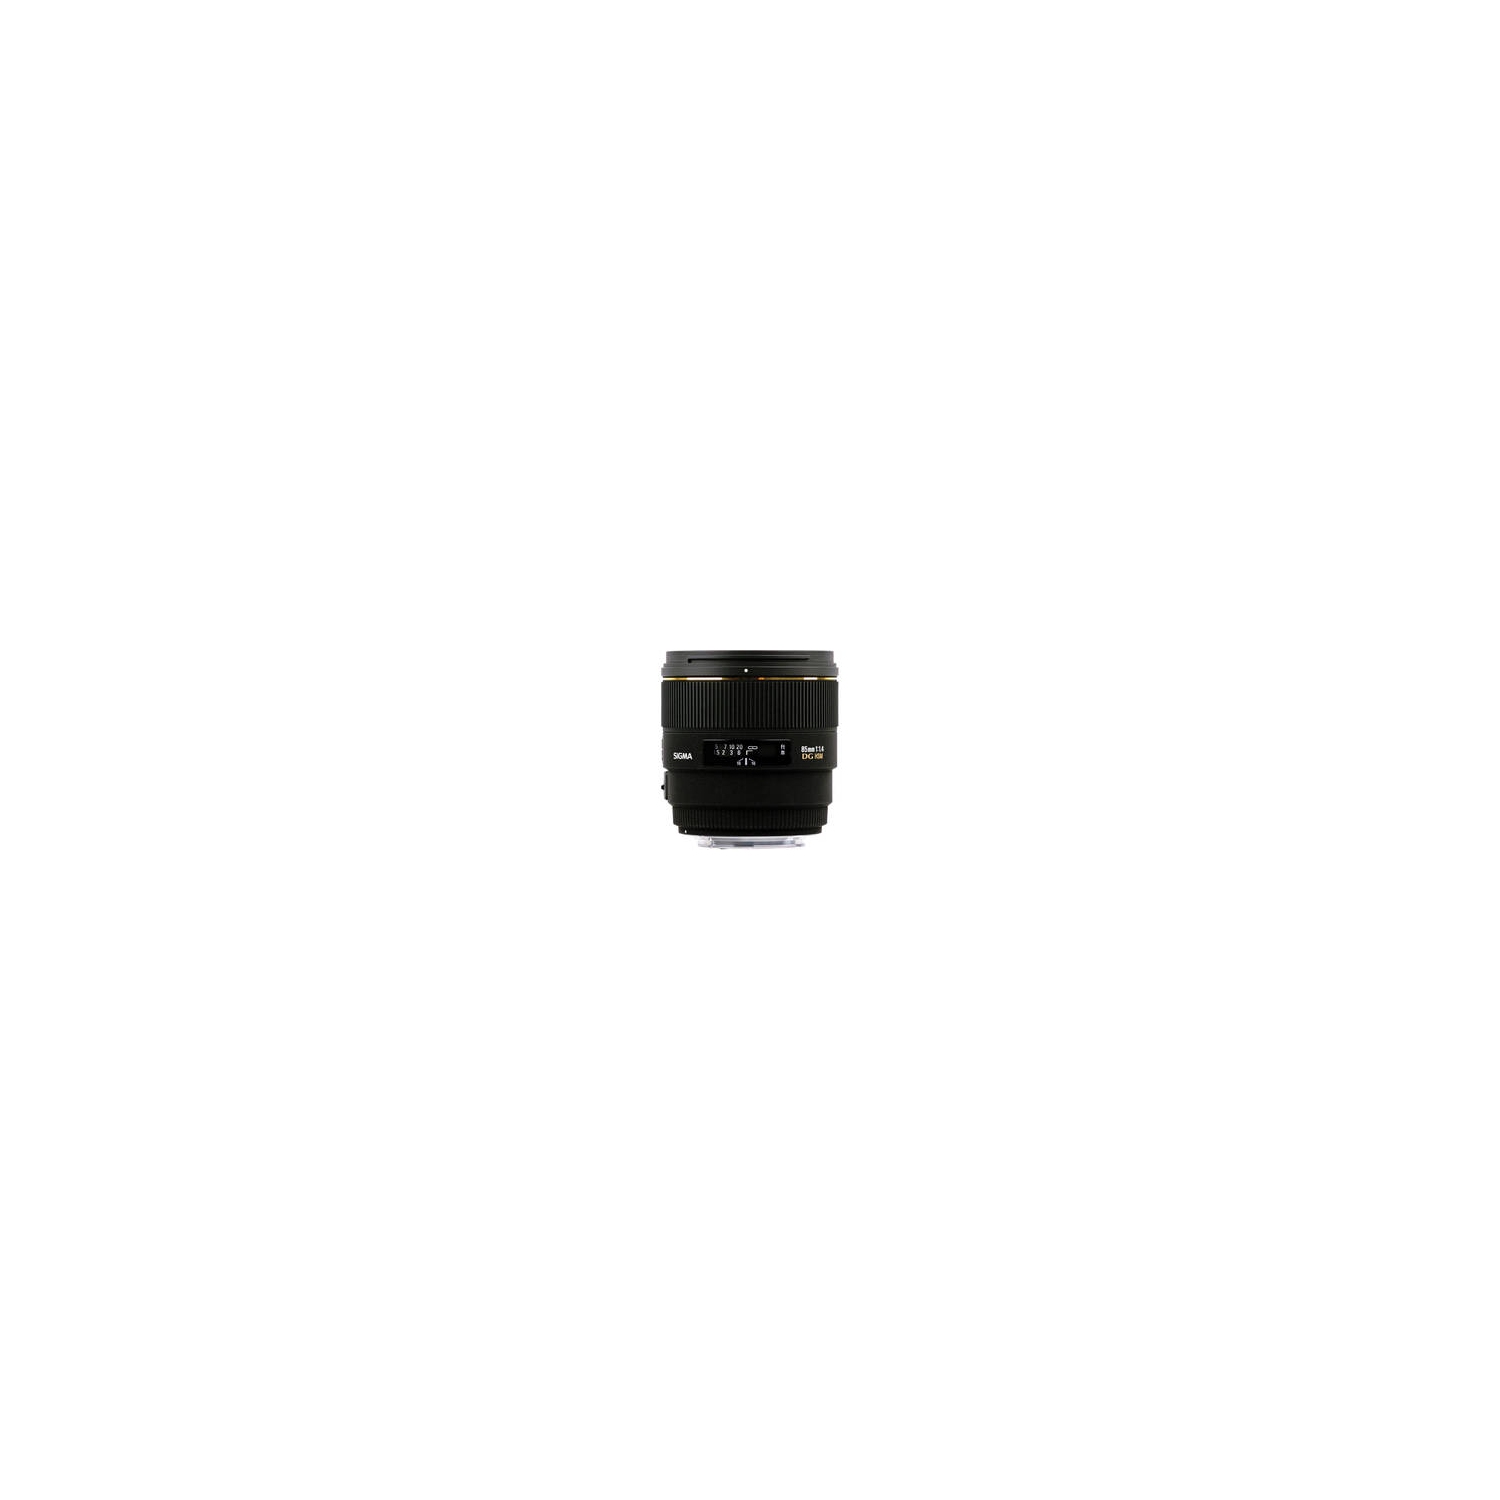 Sigma 85mm f/1.4 EX DG HSM Lens For Pentax Digital SLR Cameras - US Version w/ Seller Warranty